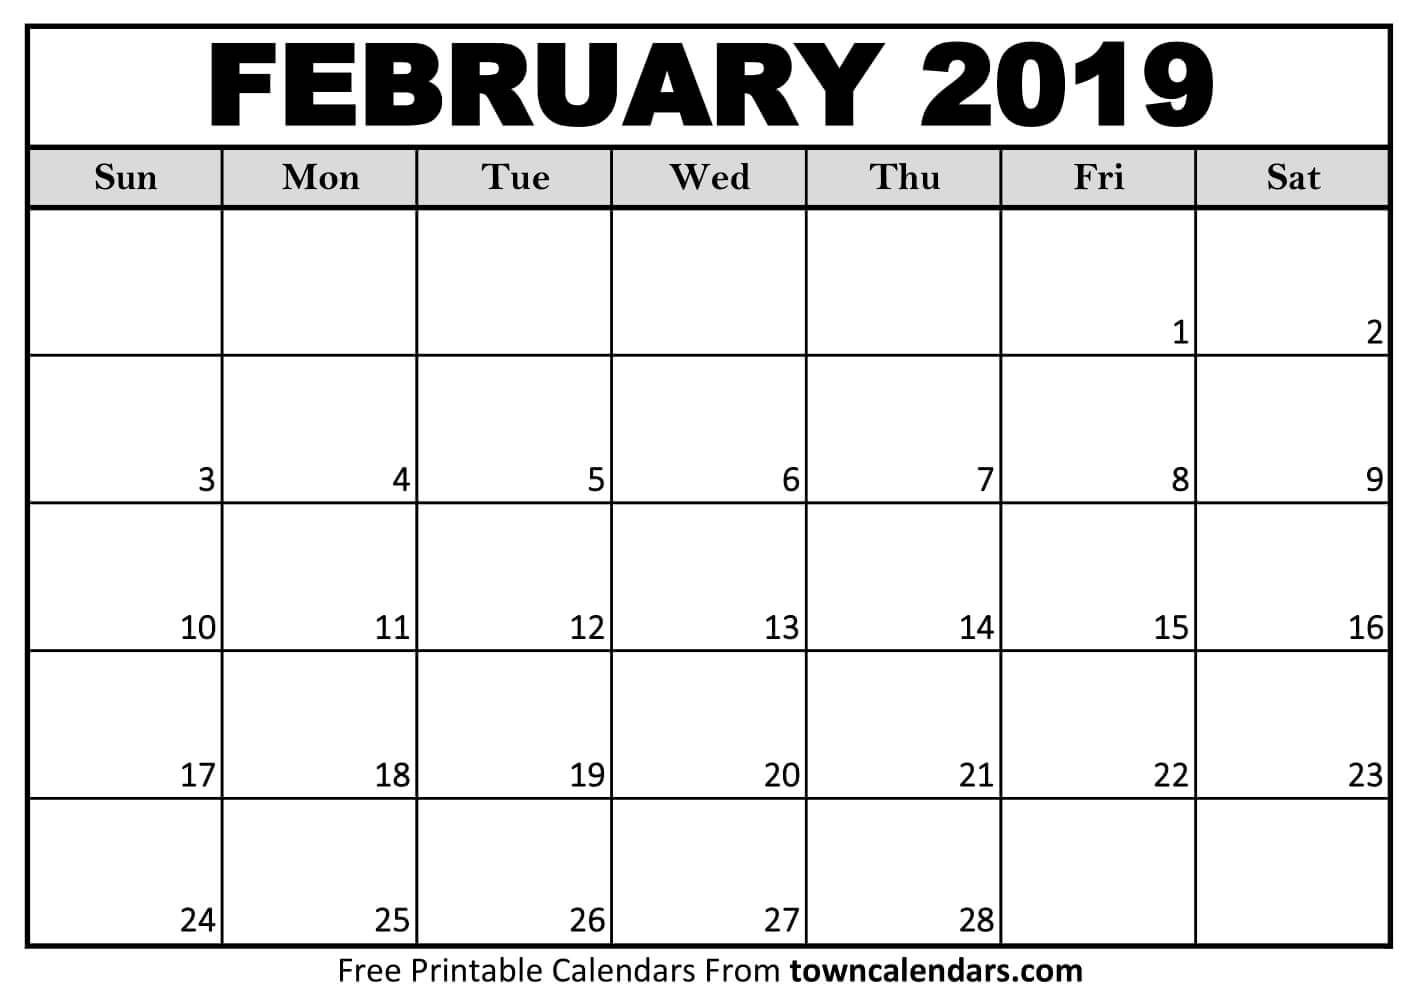 free february 2019 waterproof calendar calendar